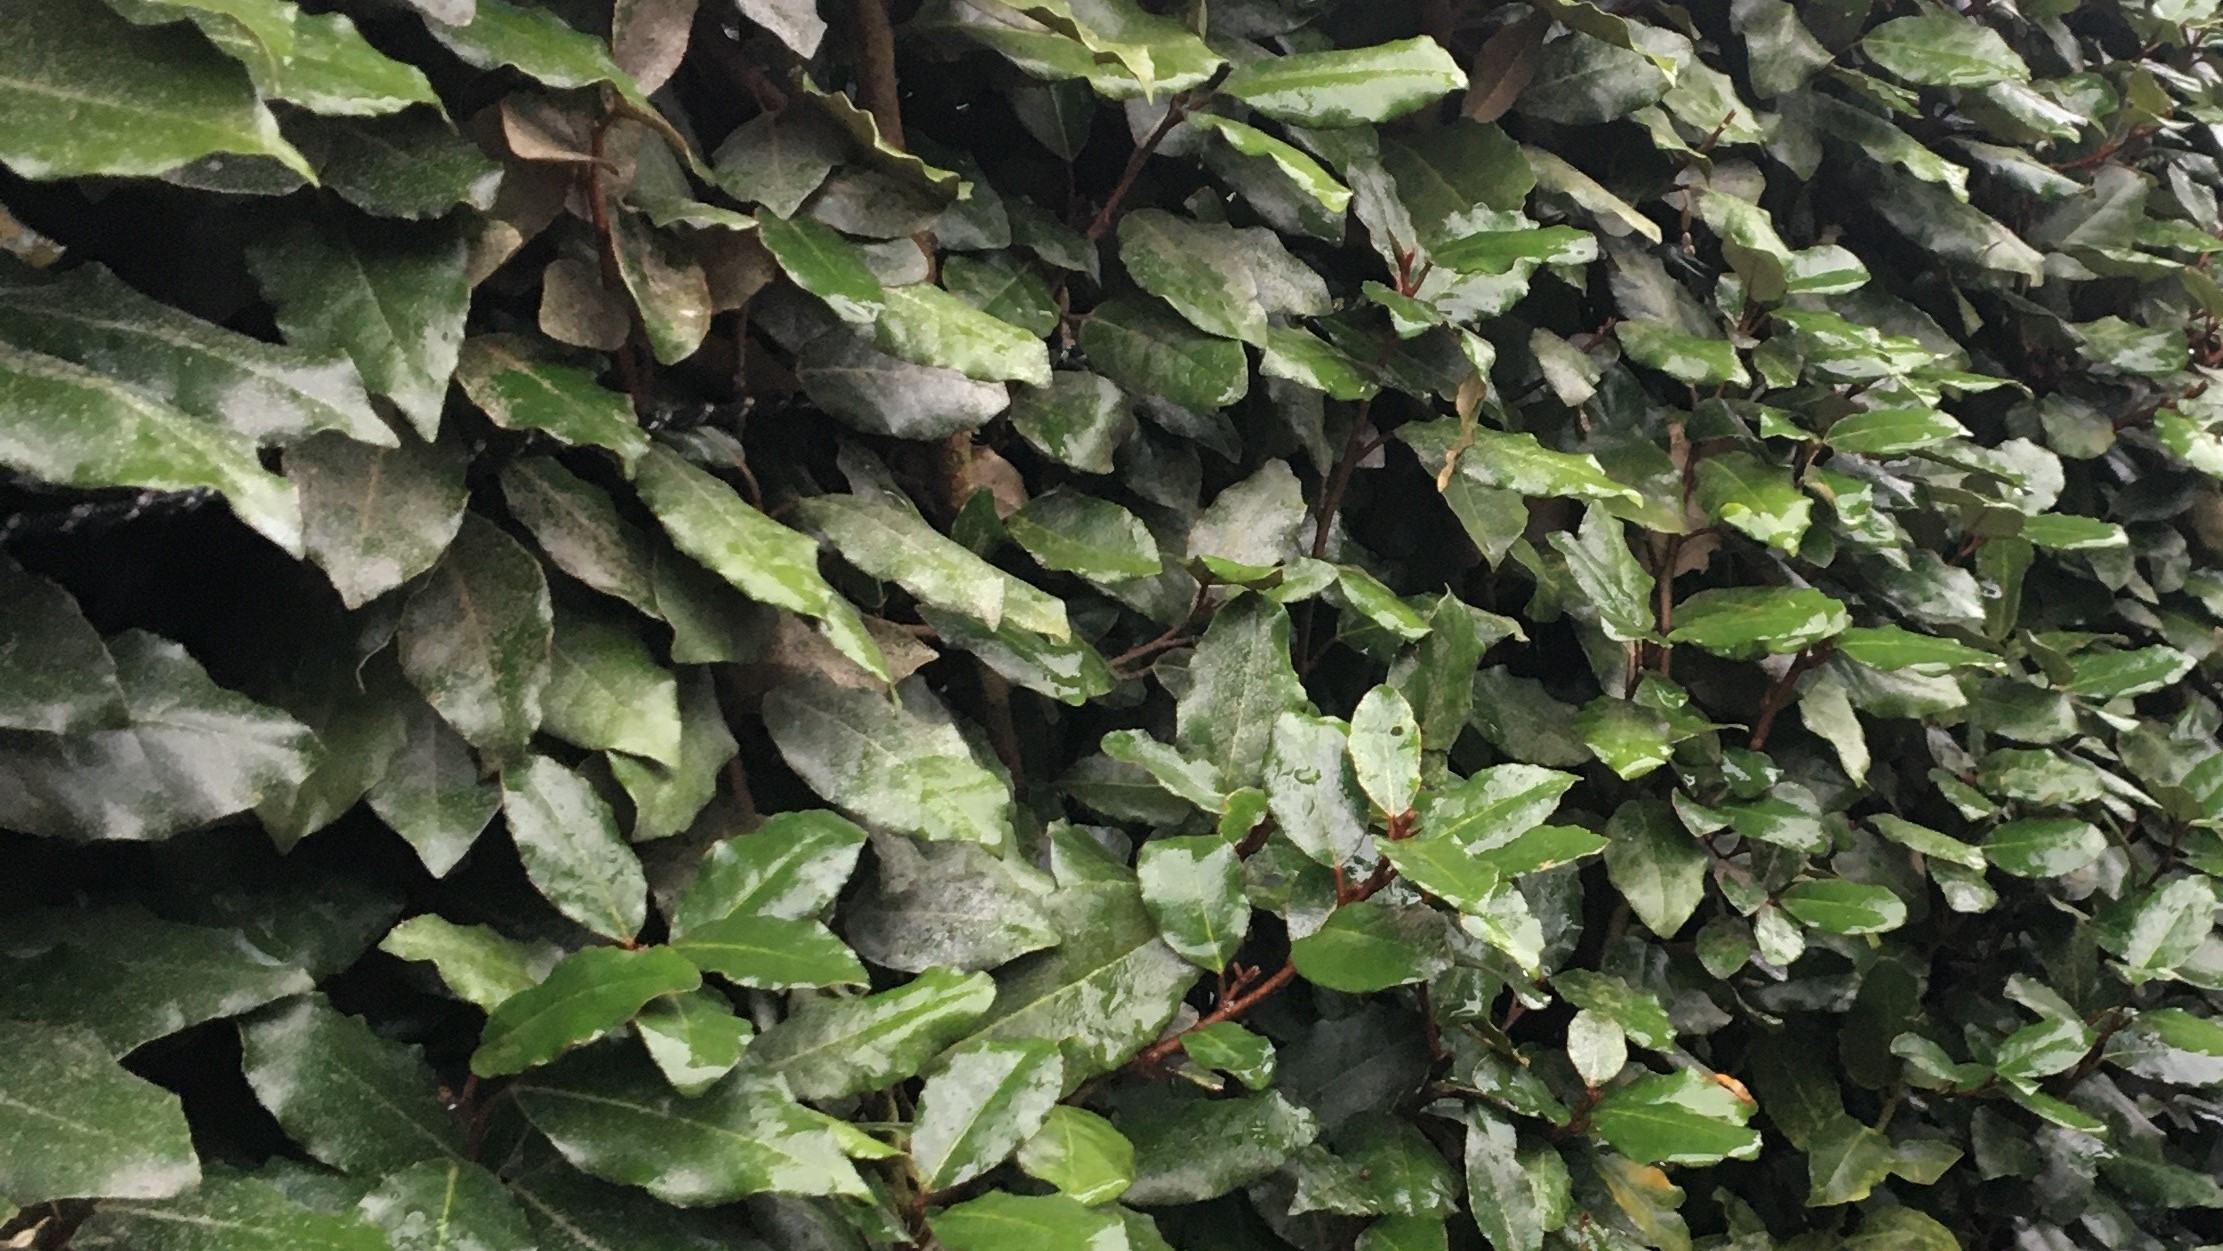 Elaeagnus leaf detail evergreen instant hedge